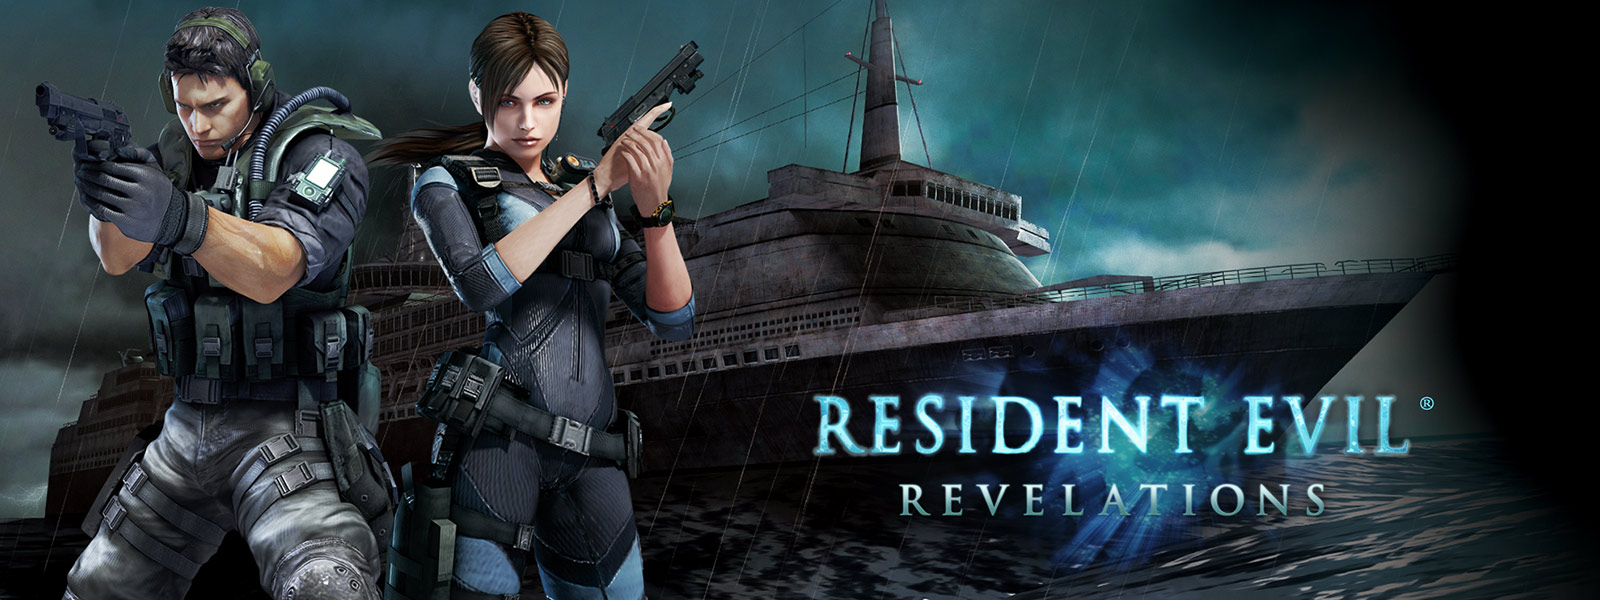 Resident Evil Revelations, δυο χαρακτήρες κρατούν όπλα μπροστά από ένα στοιχειωμένο κρουαζιερόπλοιο